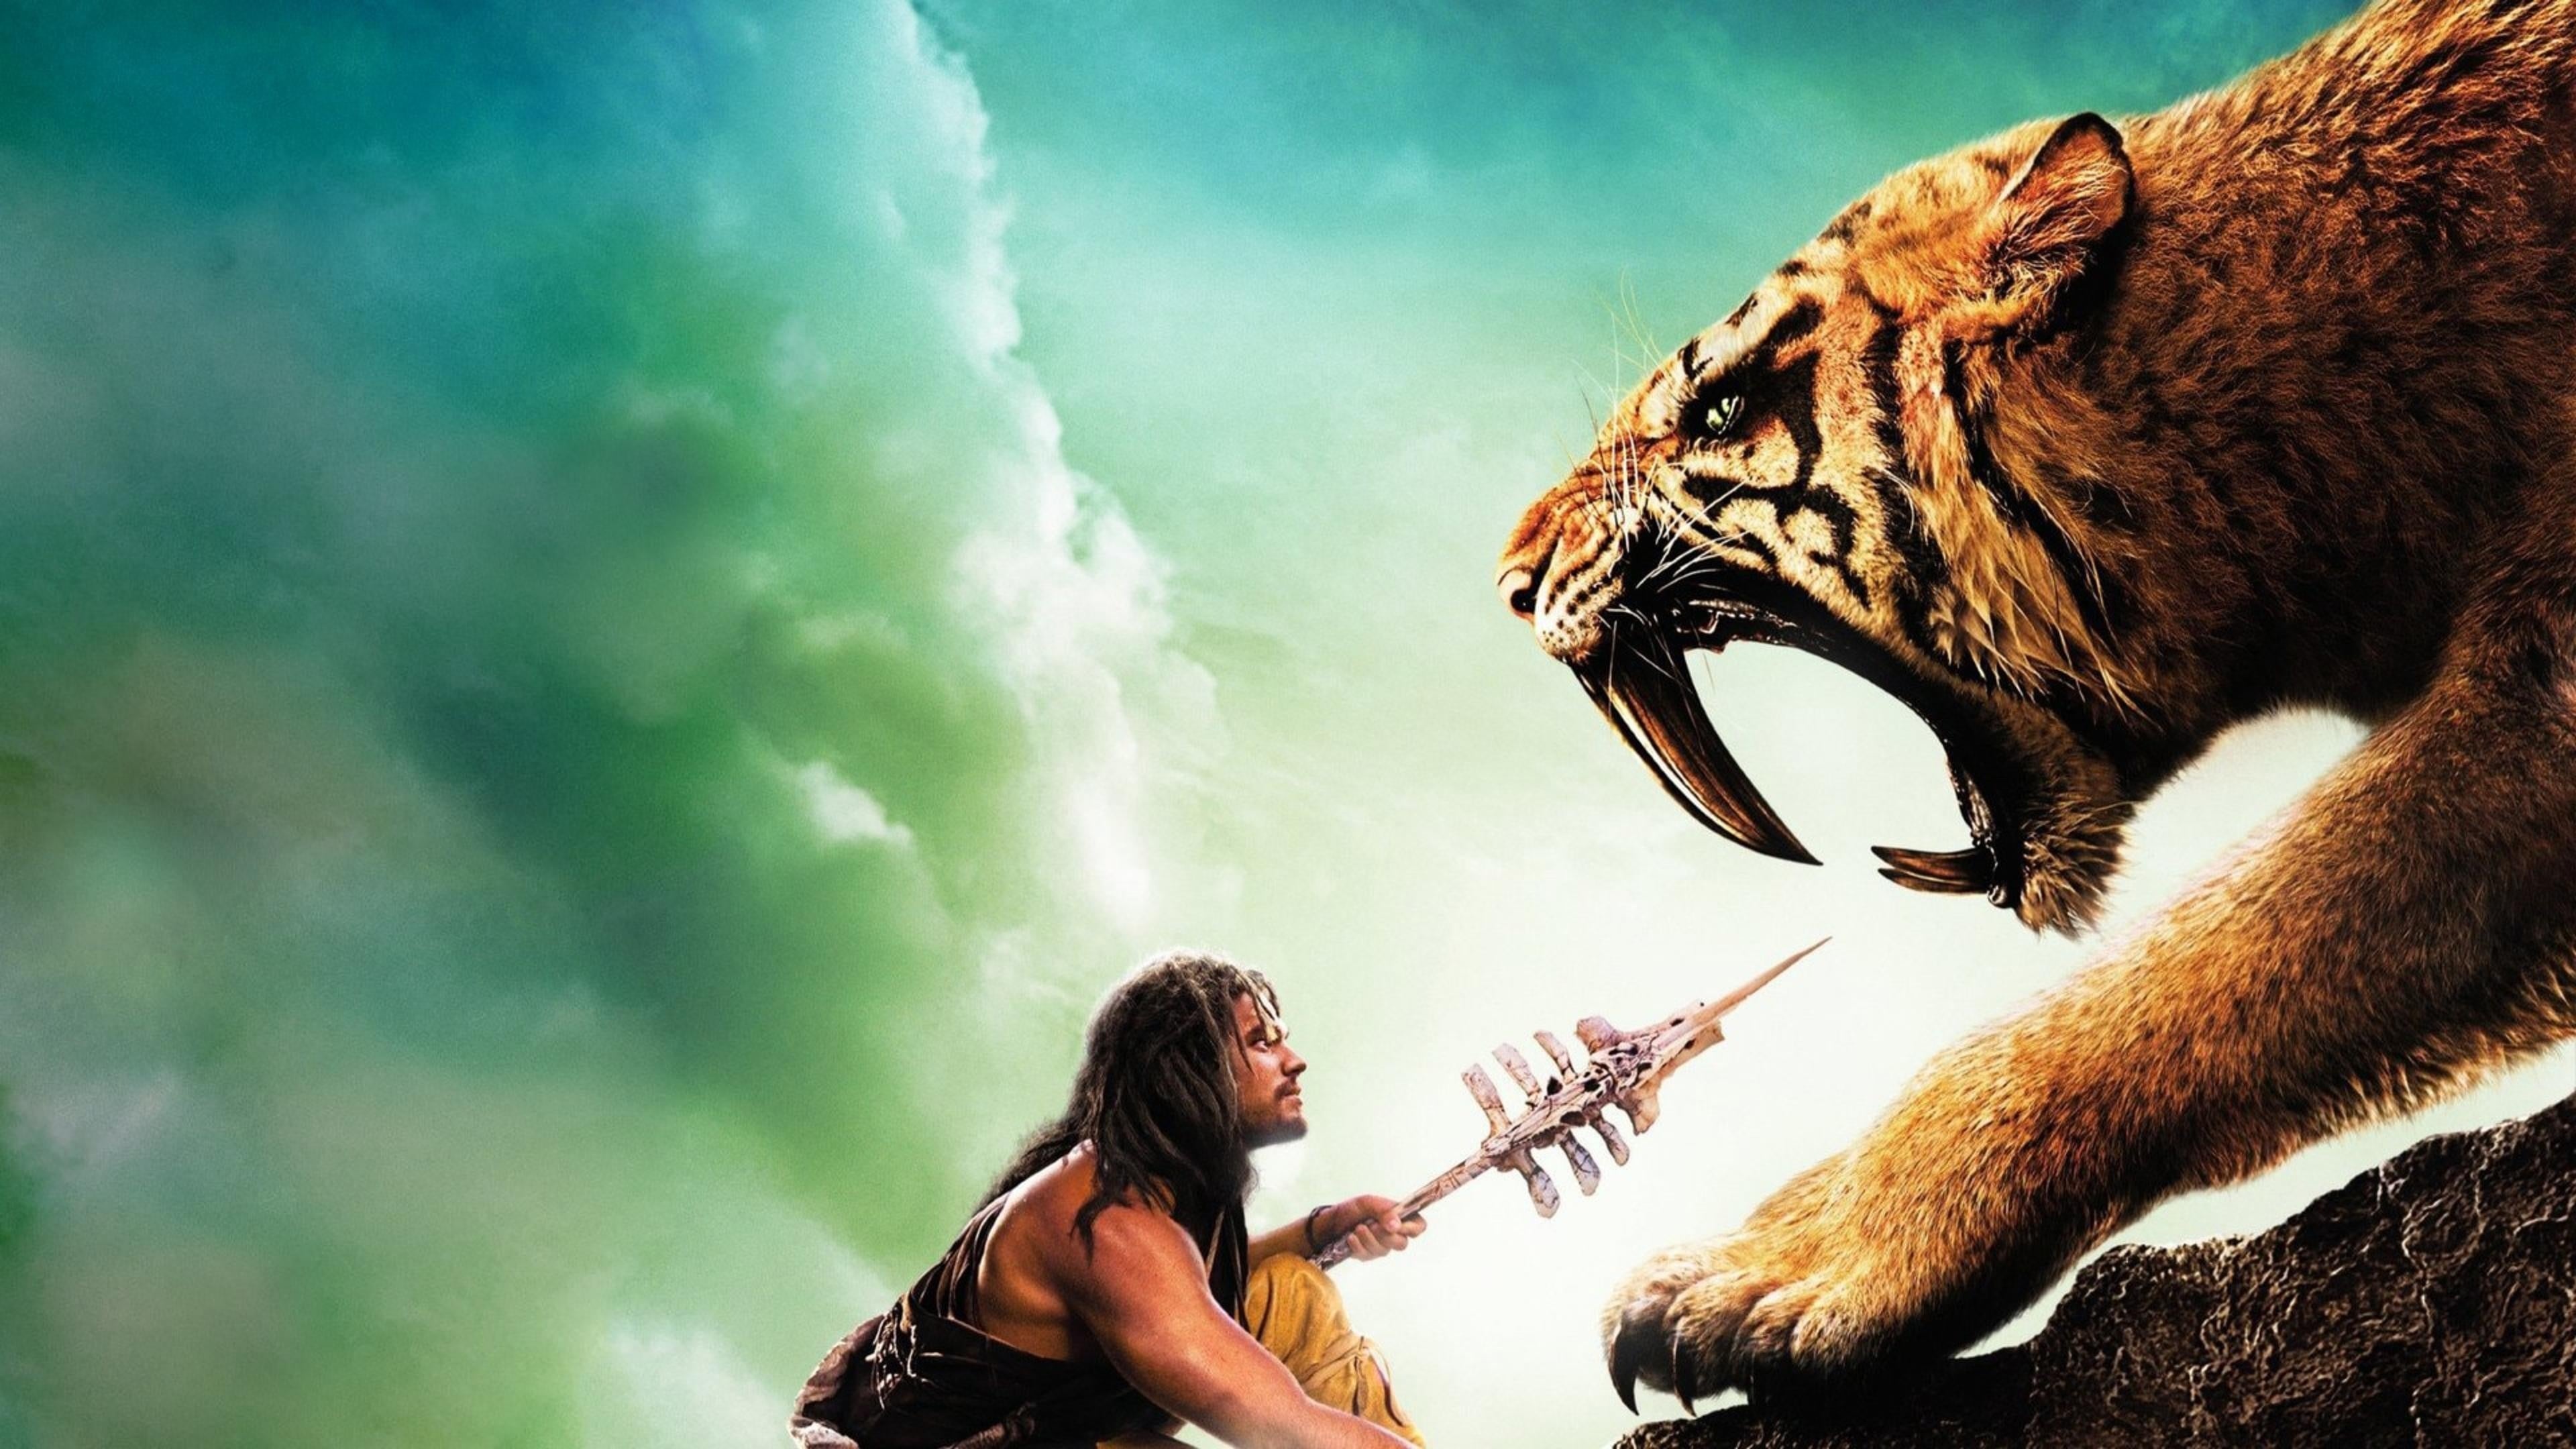 10,000 BC, Full movie online, Plex streaming, Spectacular adventure, 3840x2160 4K Desktop